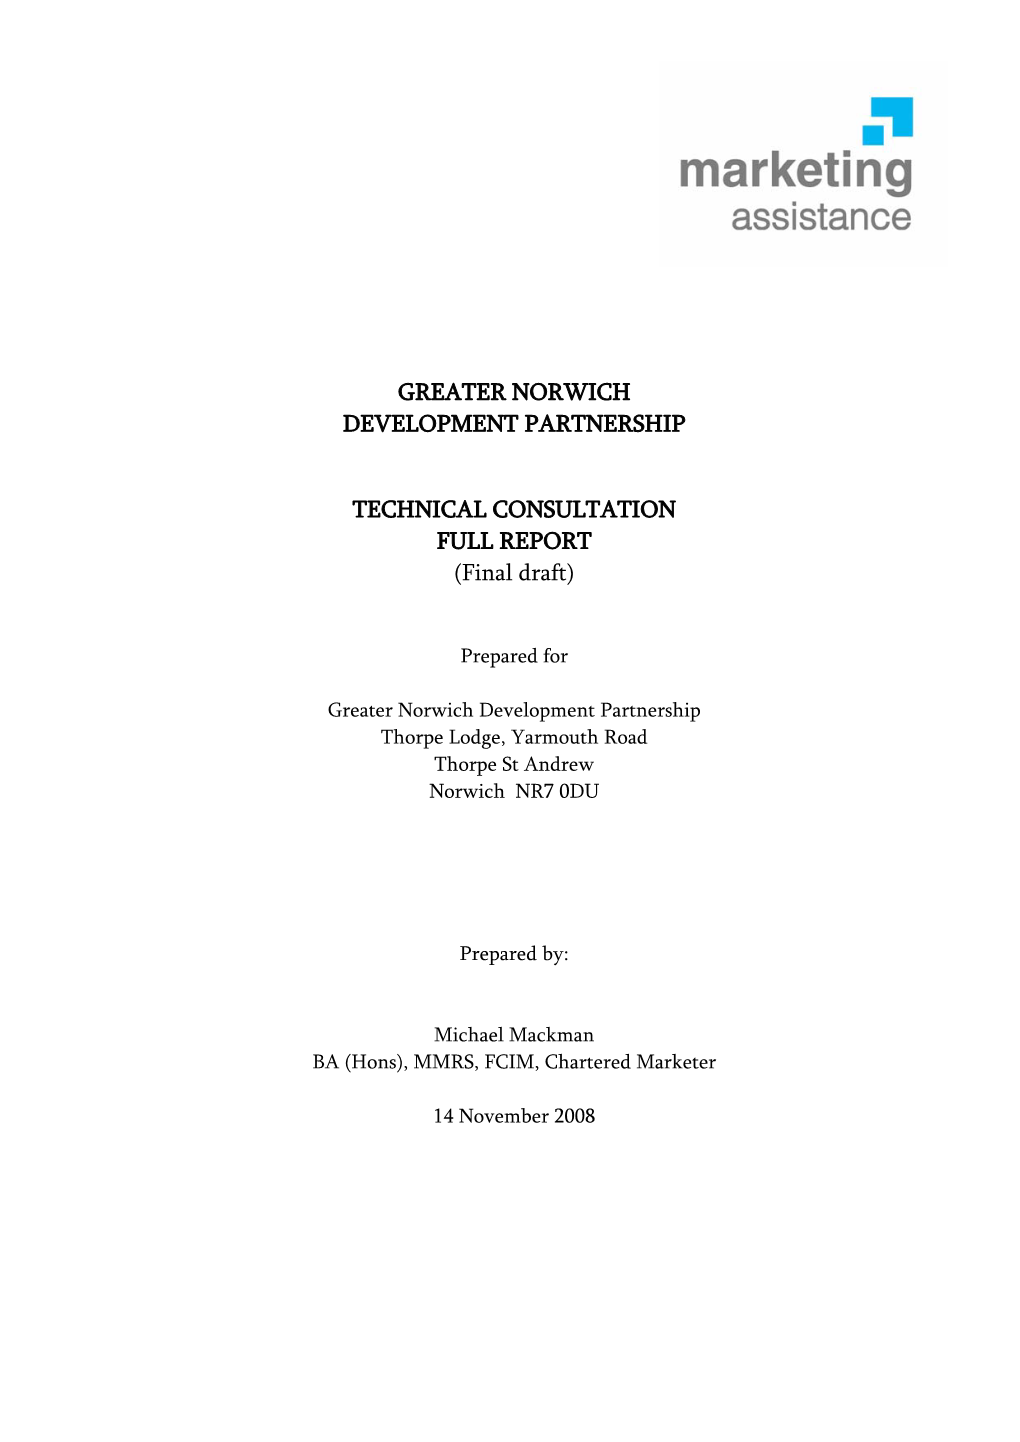 GREATER NORWICH DEVELOPMENT PARTNERSHIP TECHNICAL CONSULTATION FULL REPORT (Final Draft)